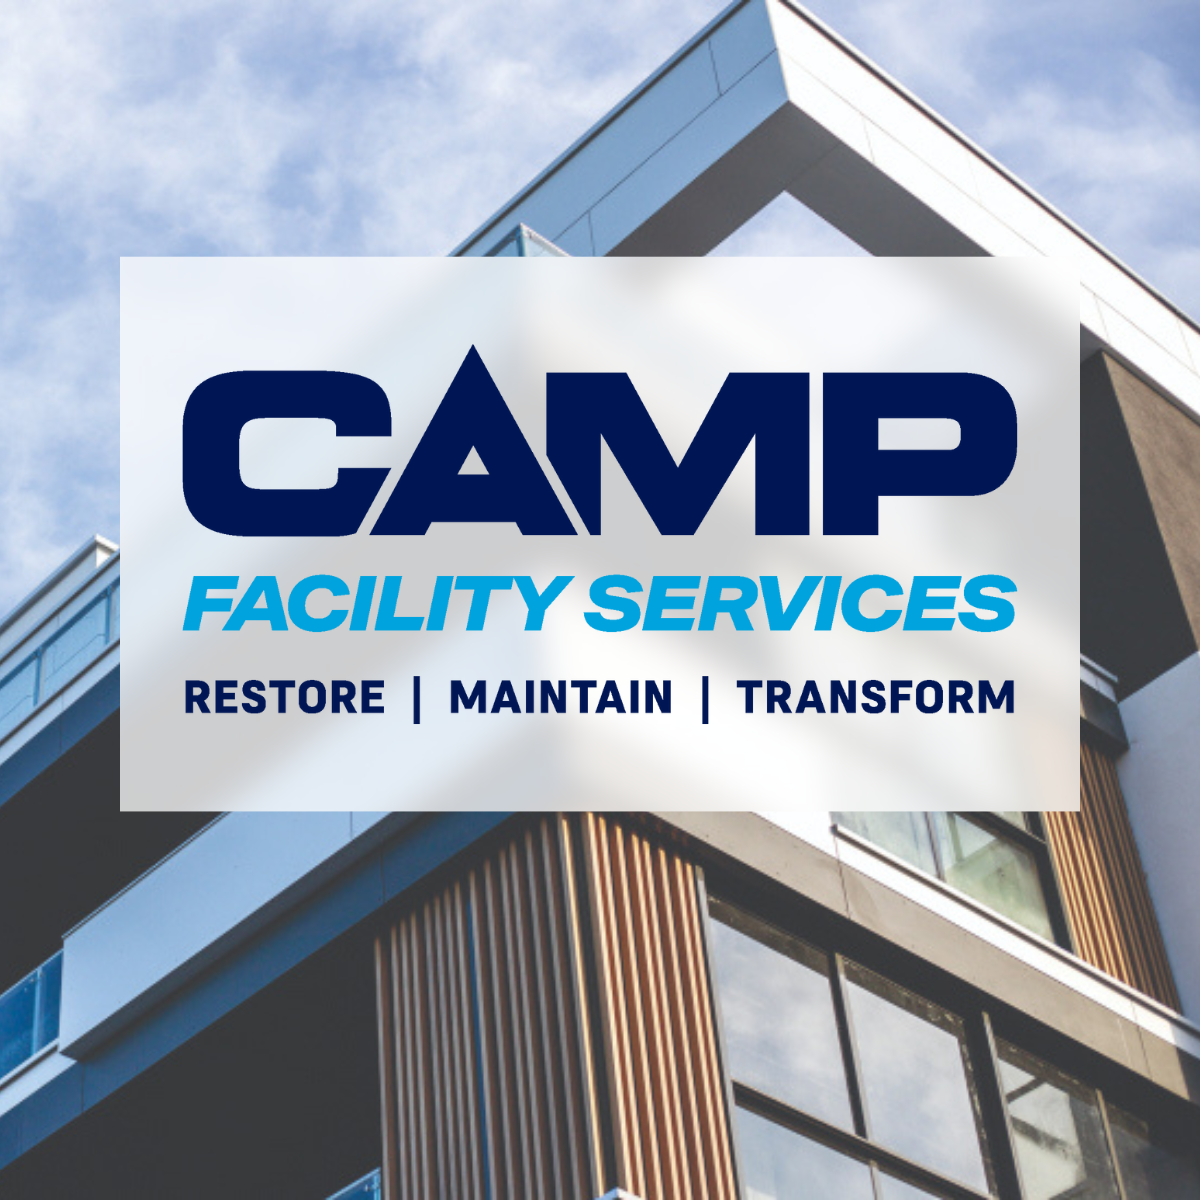 Camp Construction Services